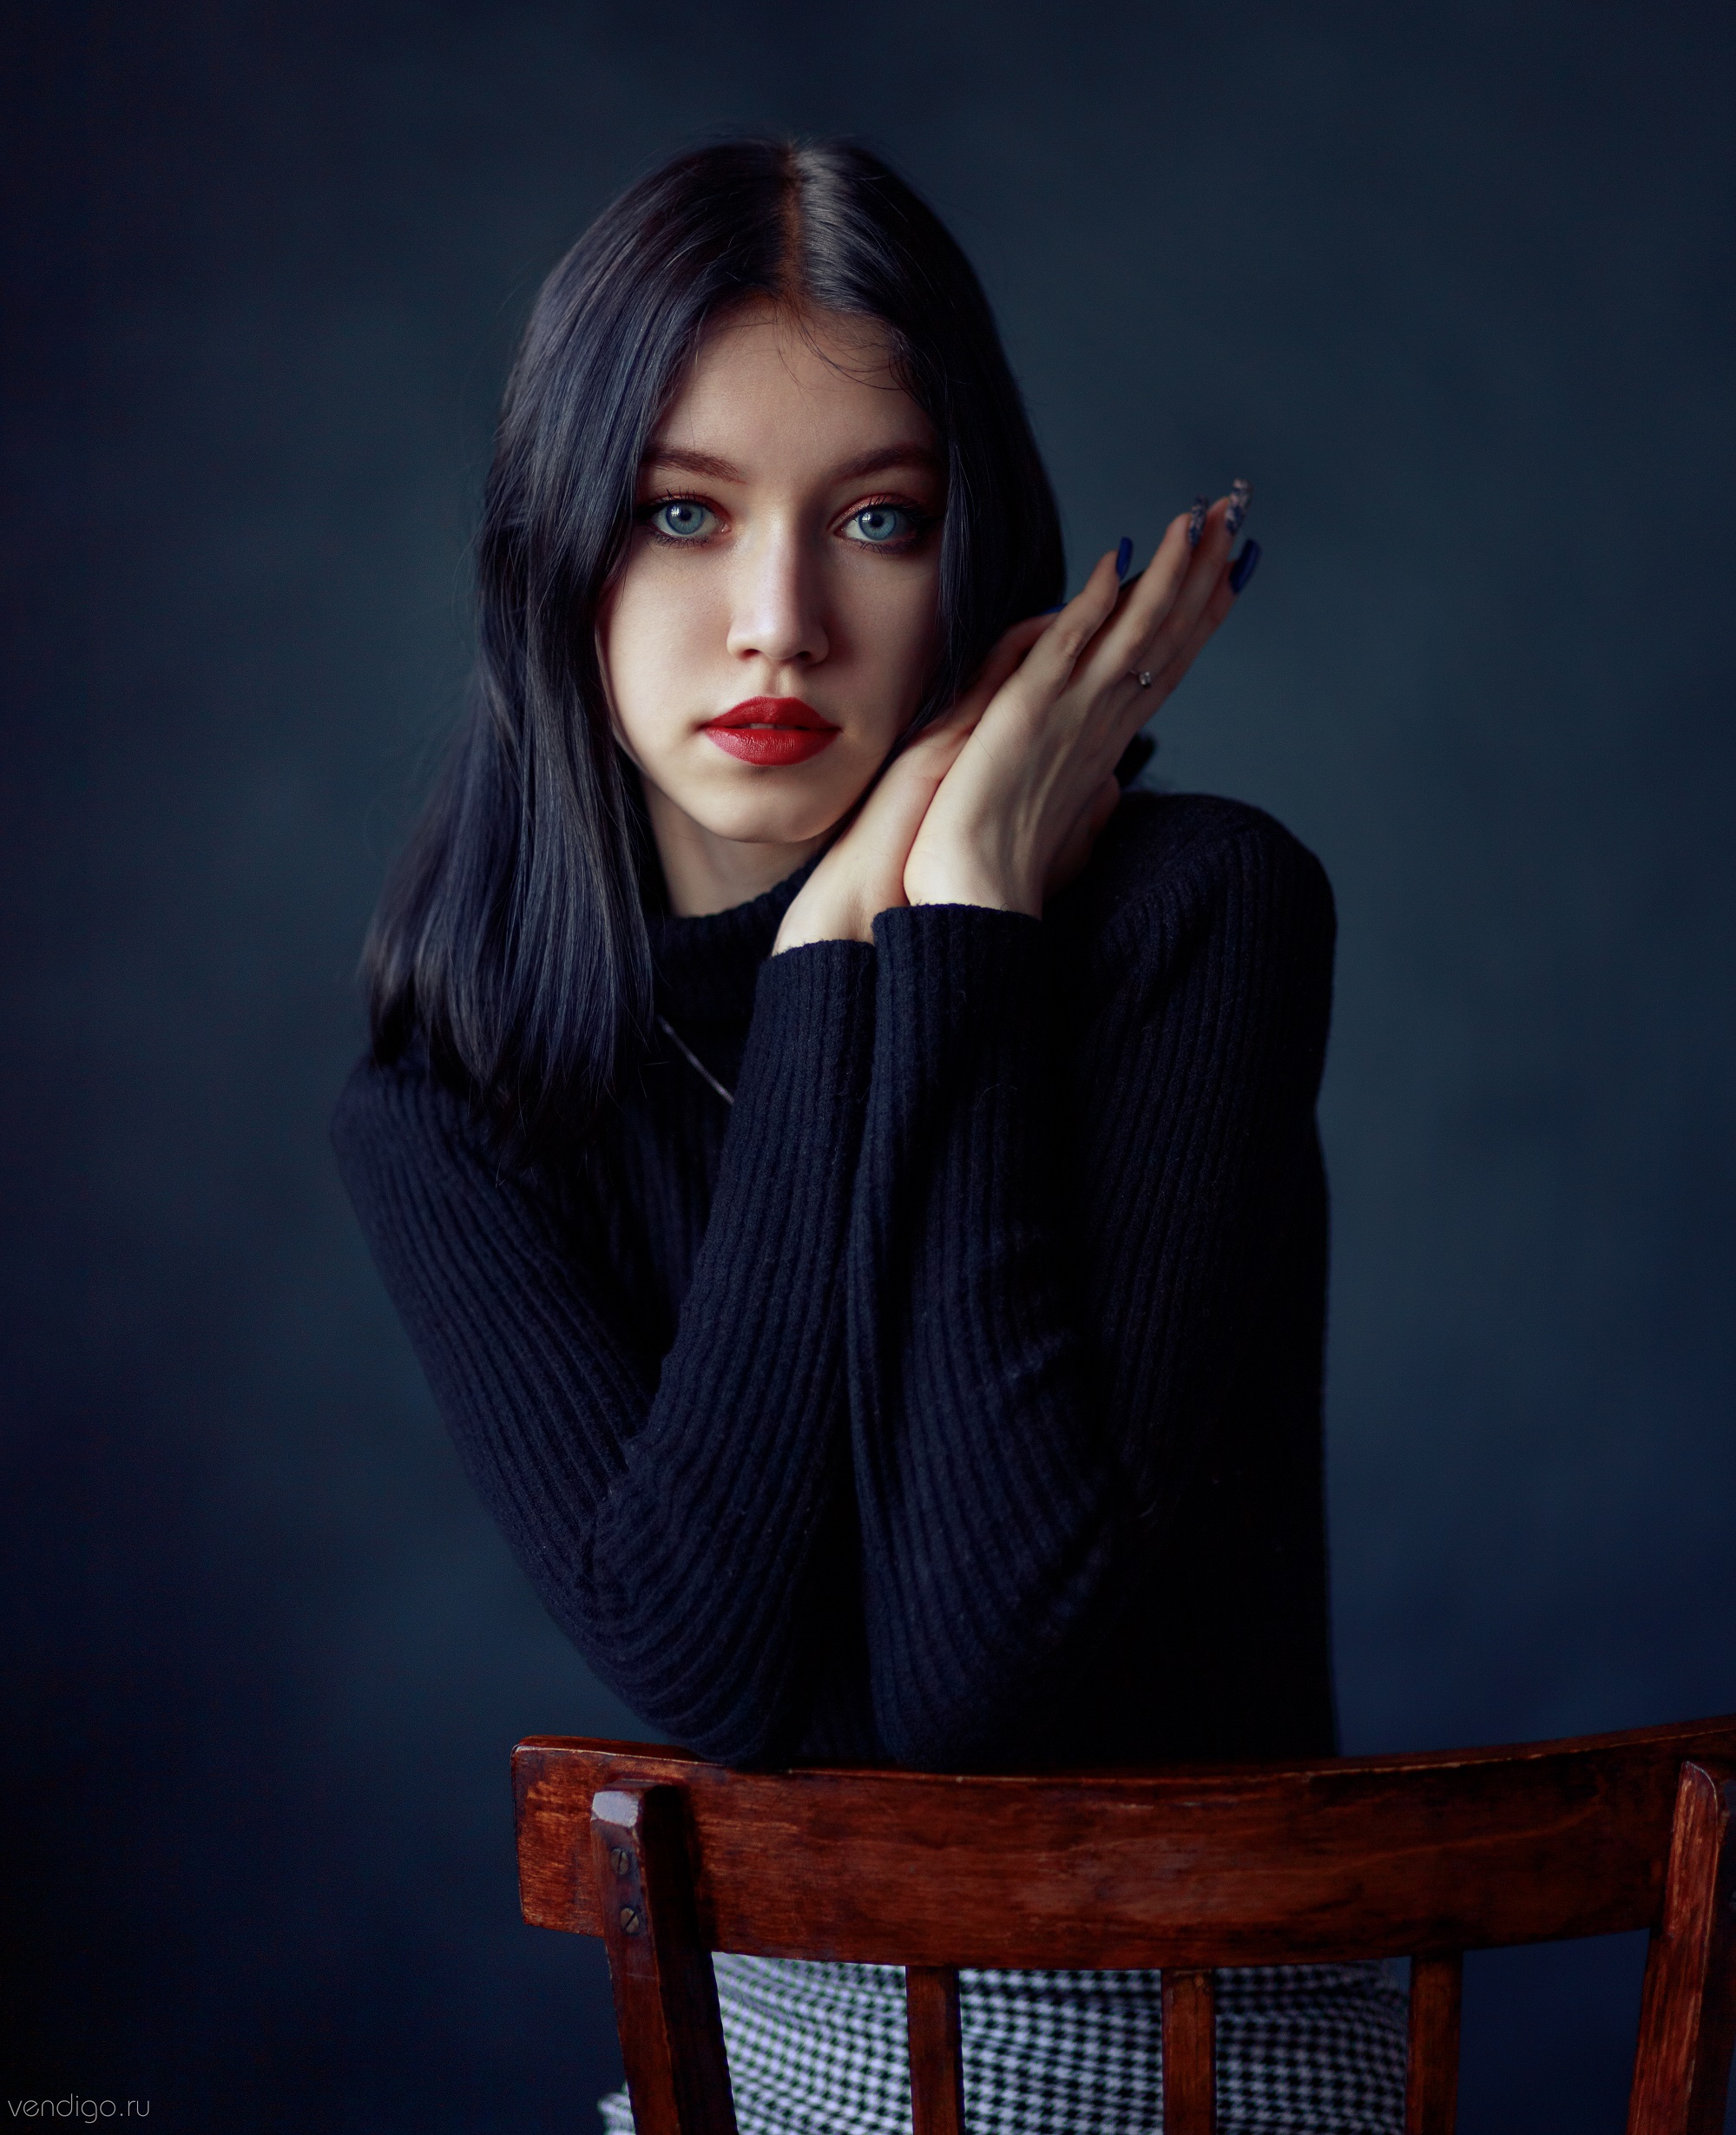 Evgeniy Bulatov Women Dark Hair Blue Eyes Red Lipstick Black Clothing Model Brunette Sweater Sitting 2000x2459